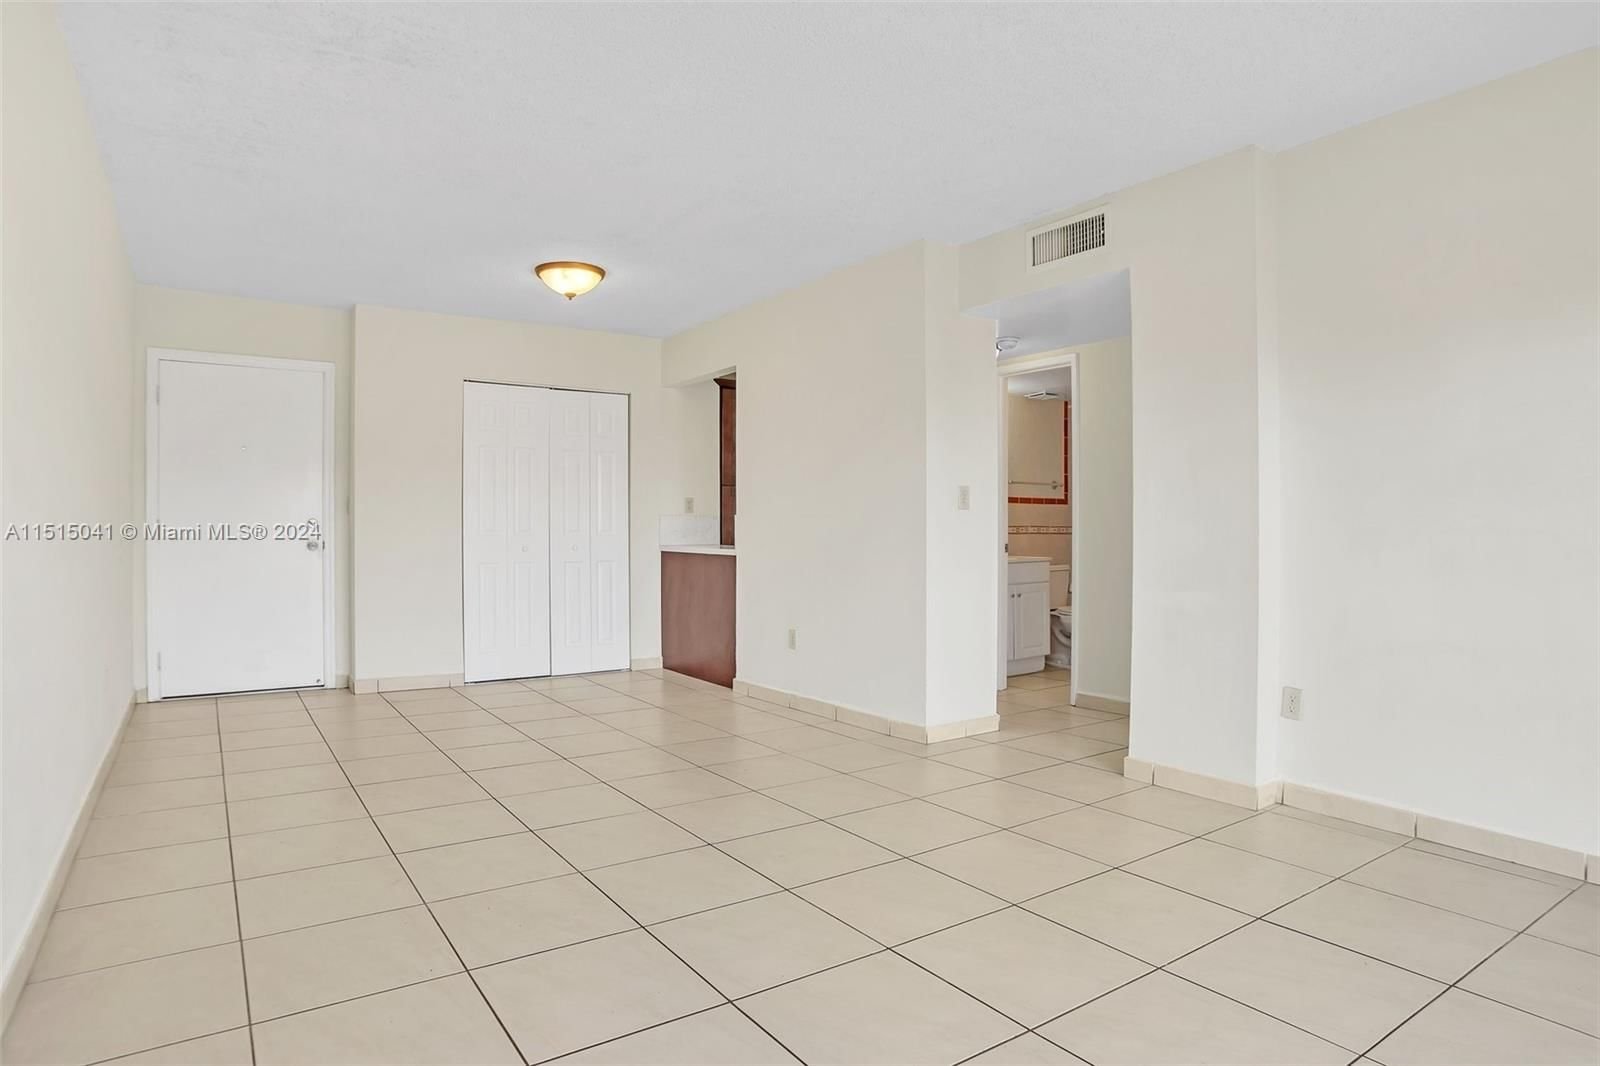 Real estate property located at 8889 Fontainebleau Blvd #401, Miami-Dade County, PINESIDE NO 2 CONDO, Miami, FL